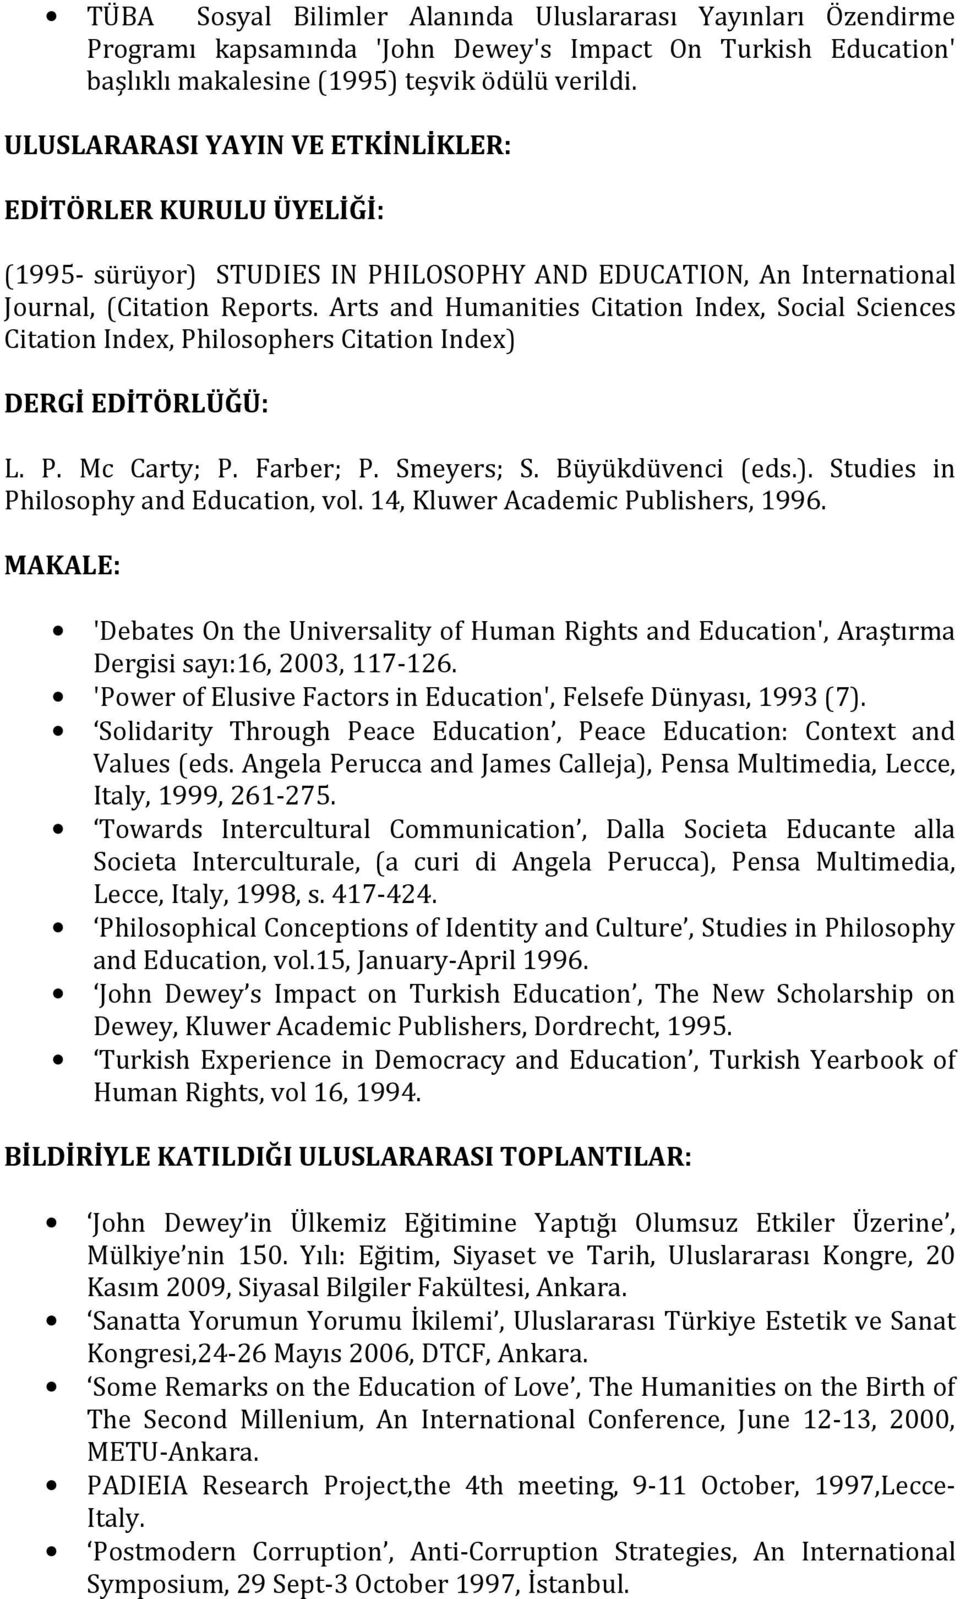 Arts and Humanities Citation Index, Social Sciences Citation Index, Philosophers Citation Index) DERGİ EDİTÖRLÜĞÜ: L. P. Mc Carty; P. Farber; P. Smeyers; S. Büyükdüvenci (eds.). Studies in Philosophy and Education, vol.